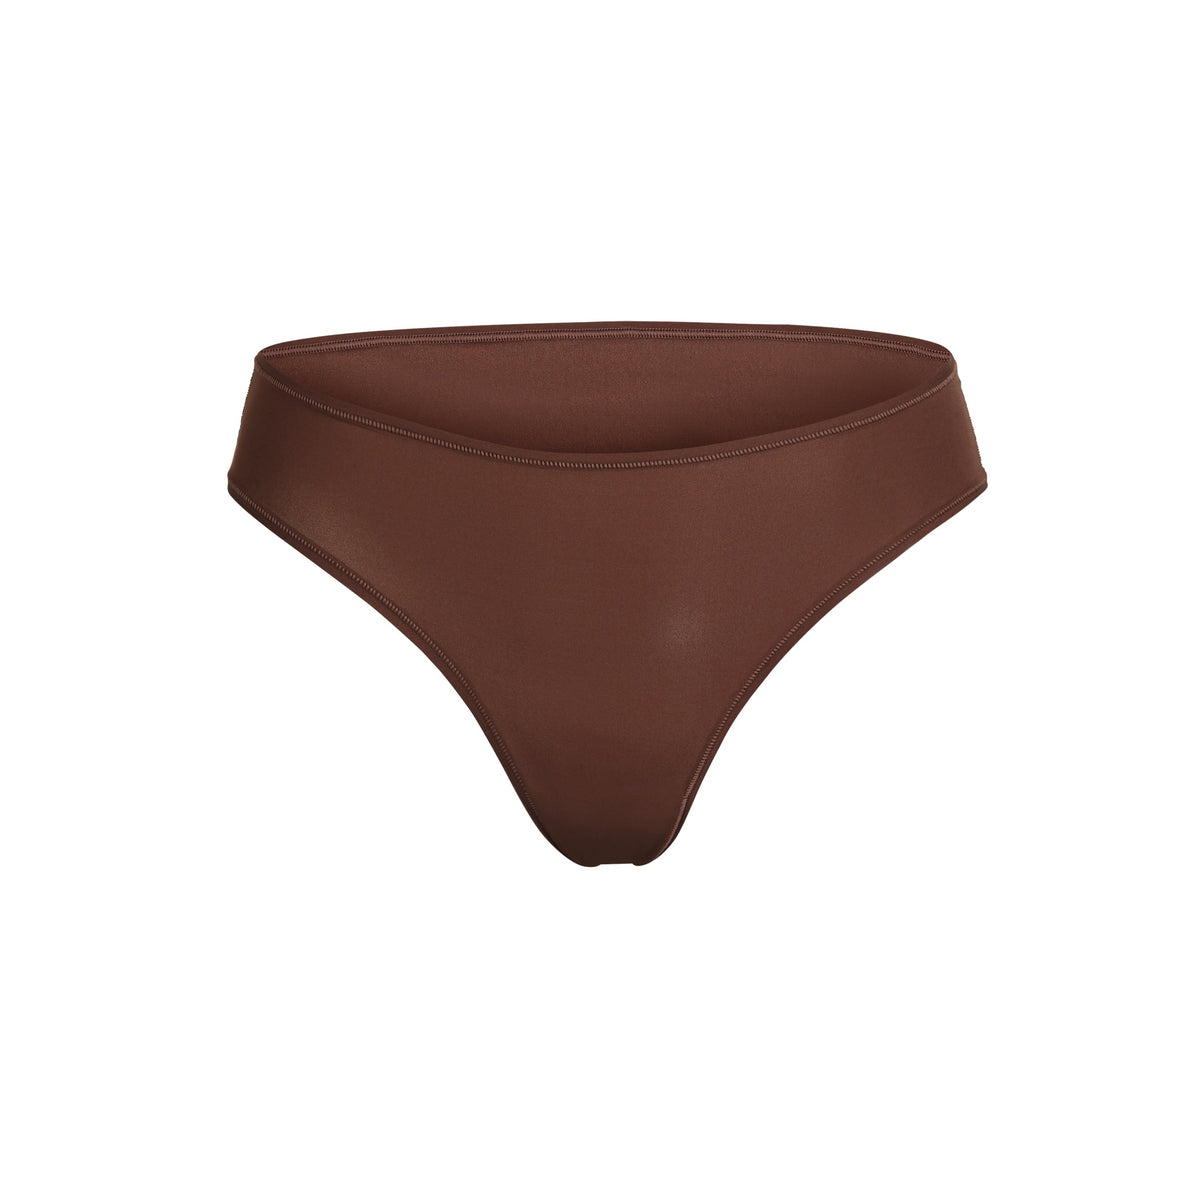 SZA stars in new SKIMS underwear campaign wearing signature Fits